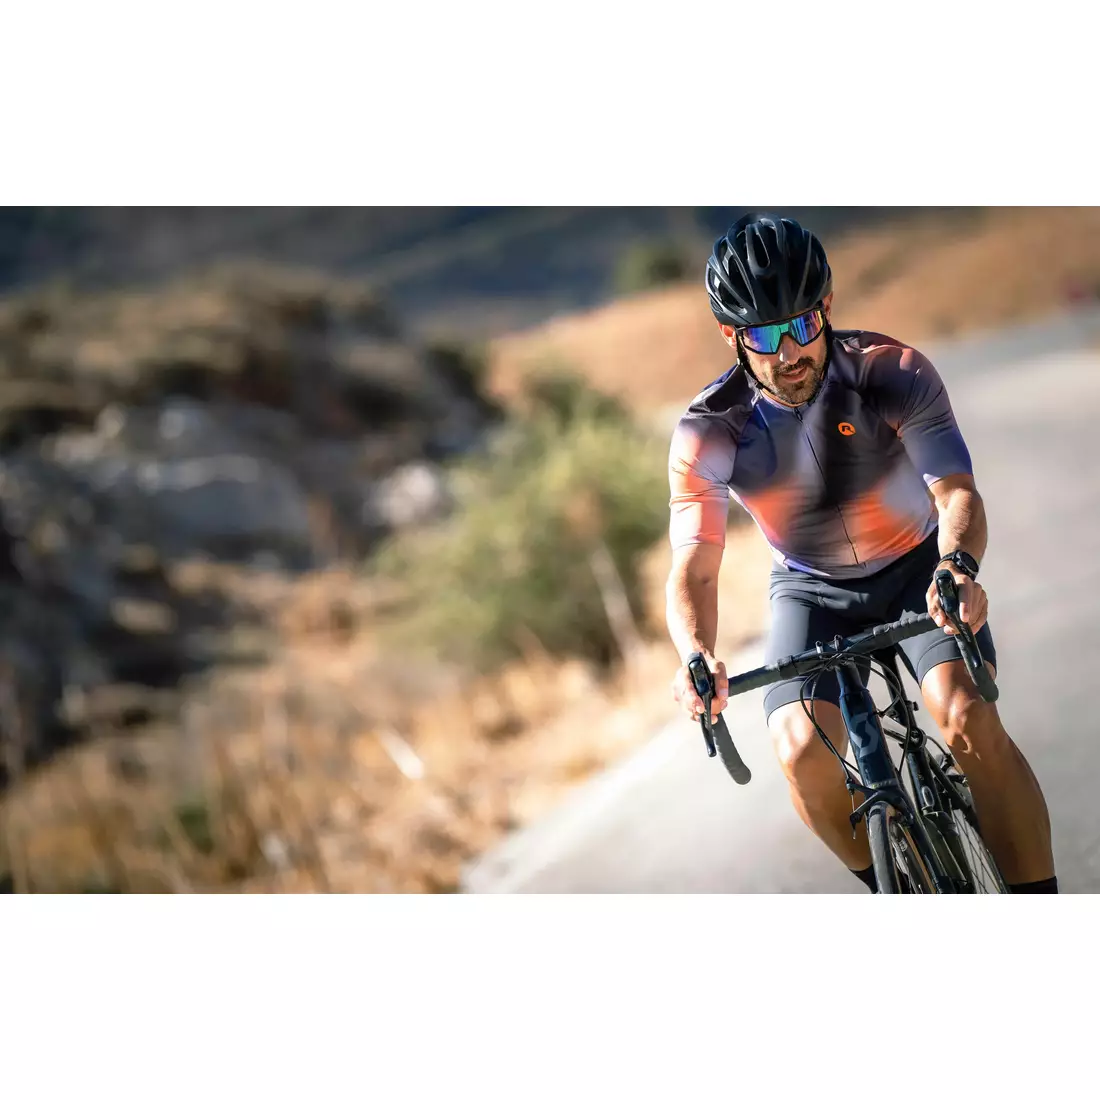 Tricou de ciclism Rogelli HALO portocaliu